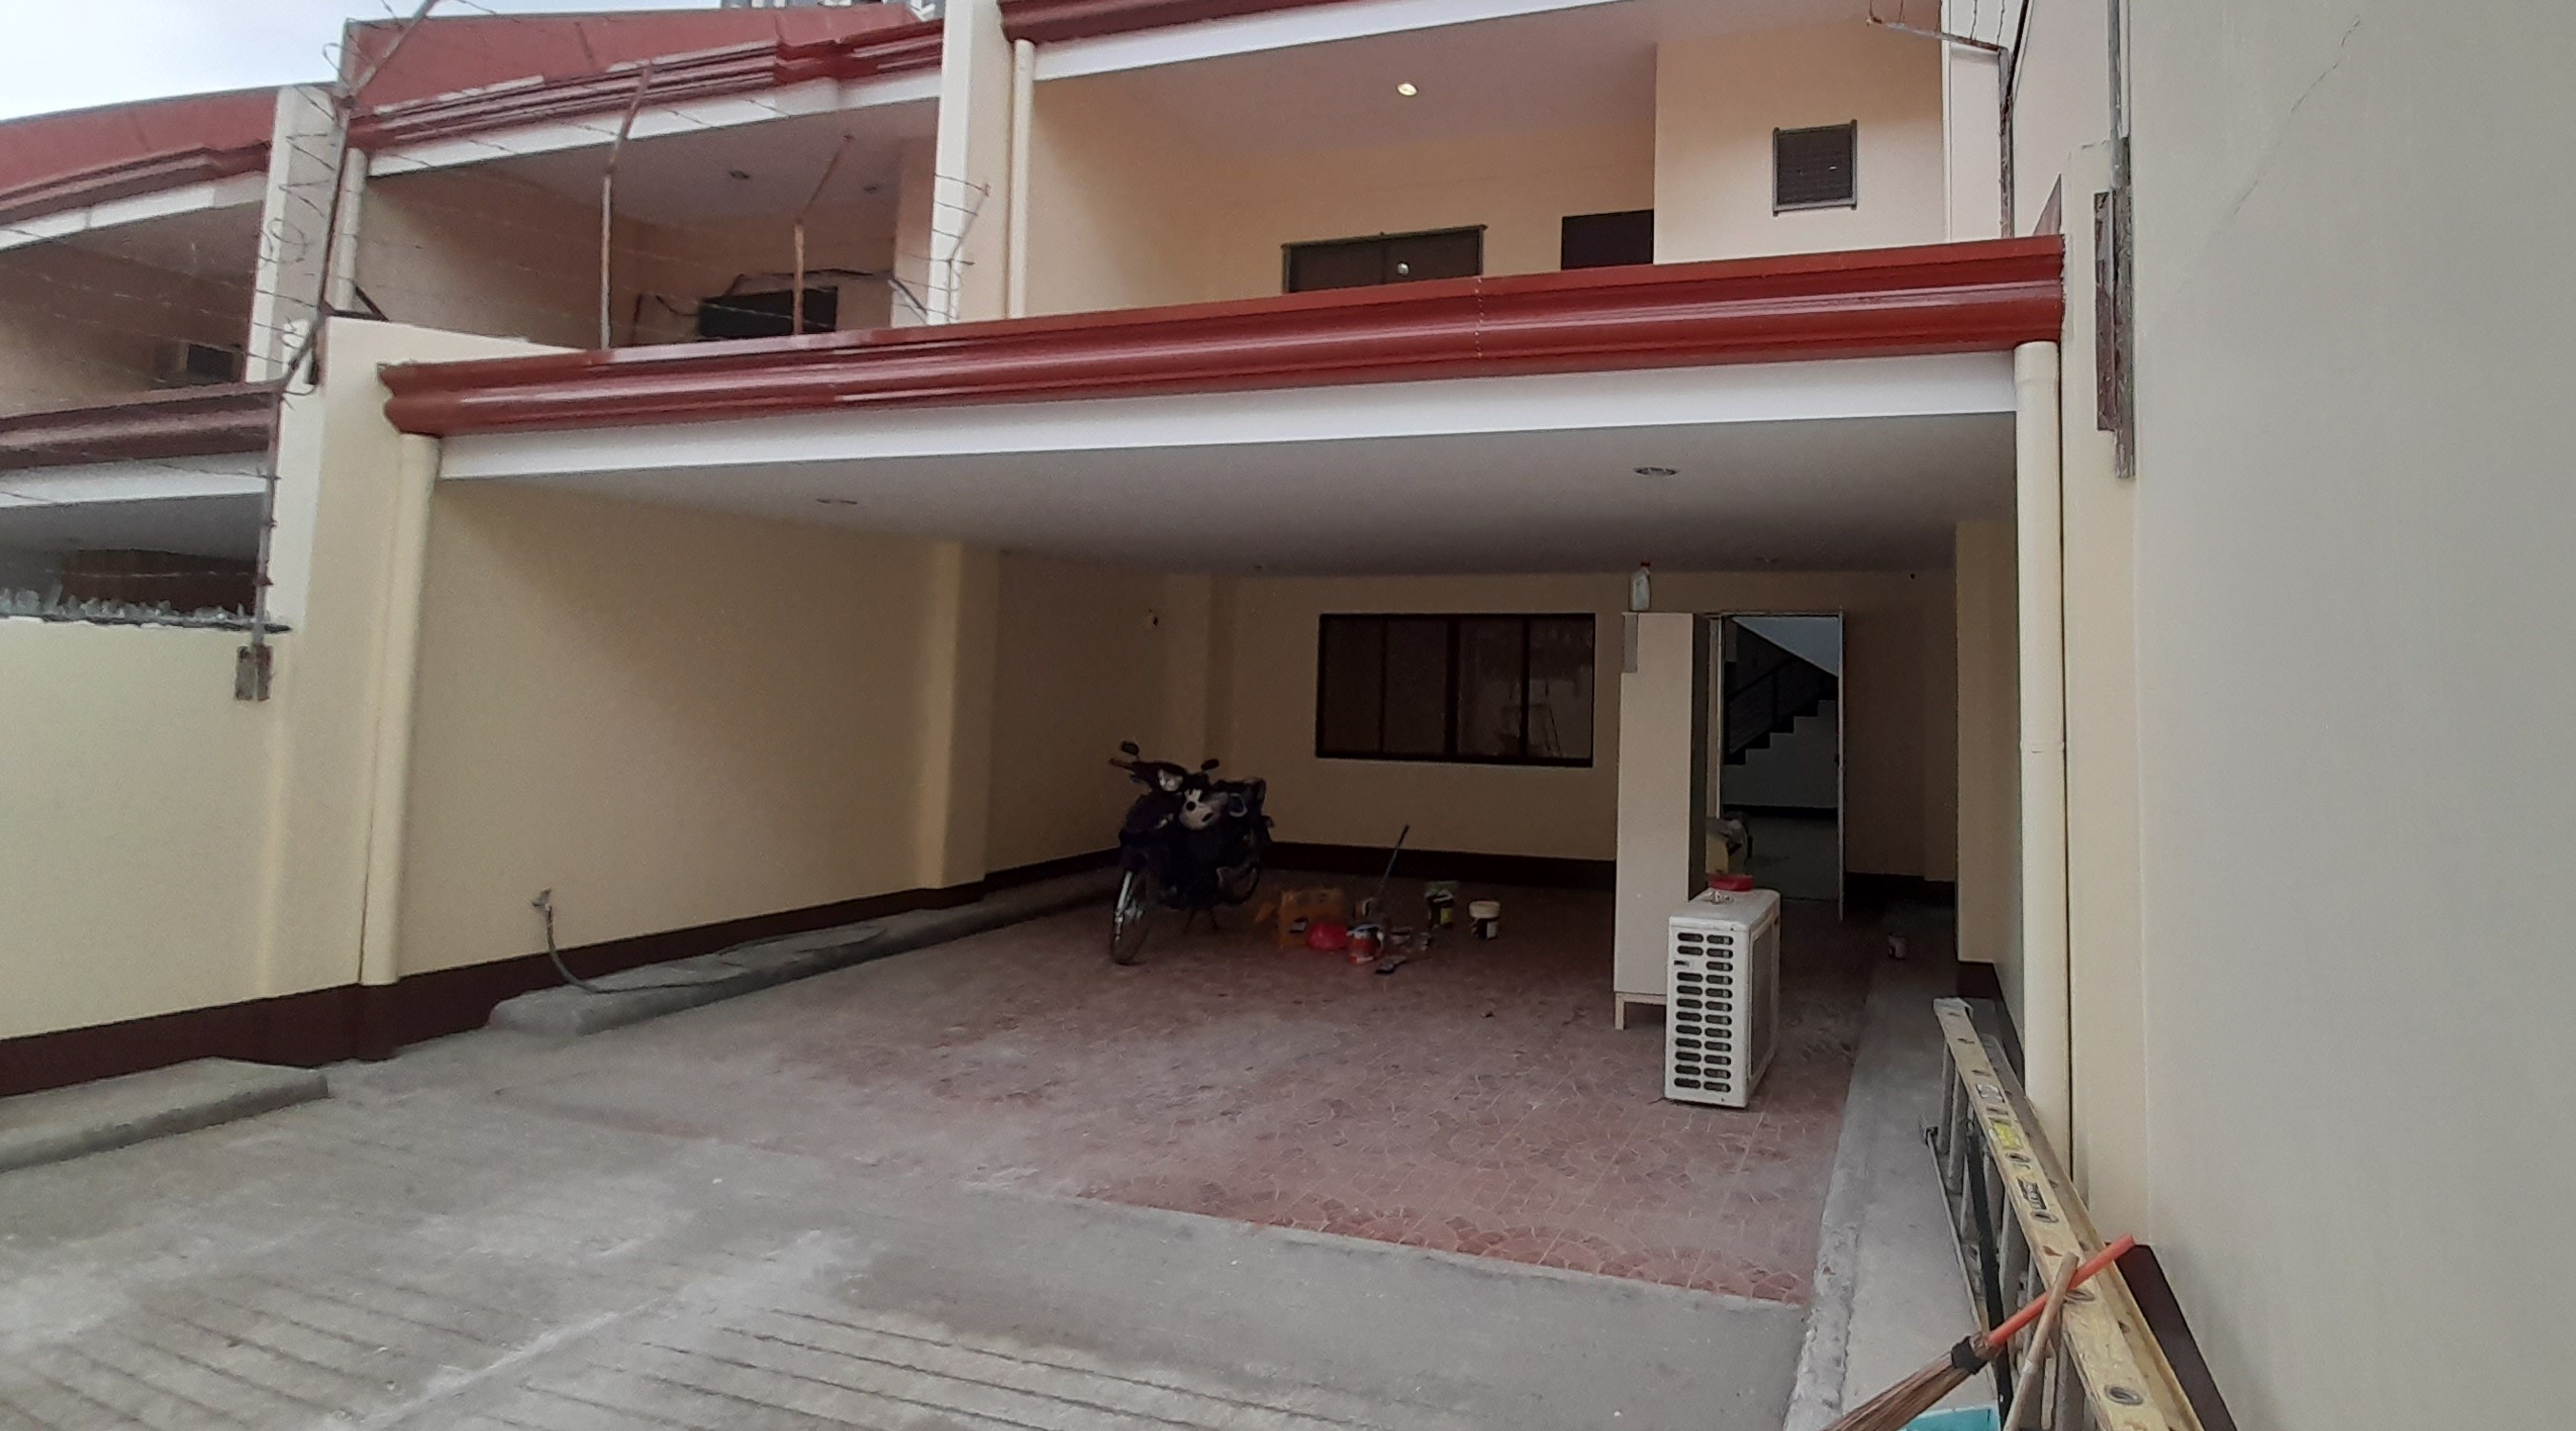 4-bedroom-unfurnished-apartment-in-mabolo-cebu-city-cebu